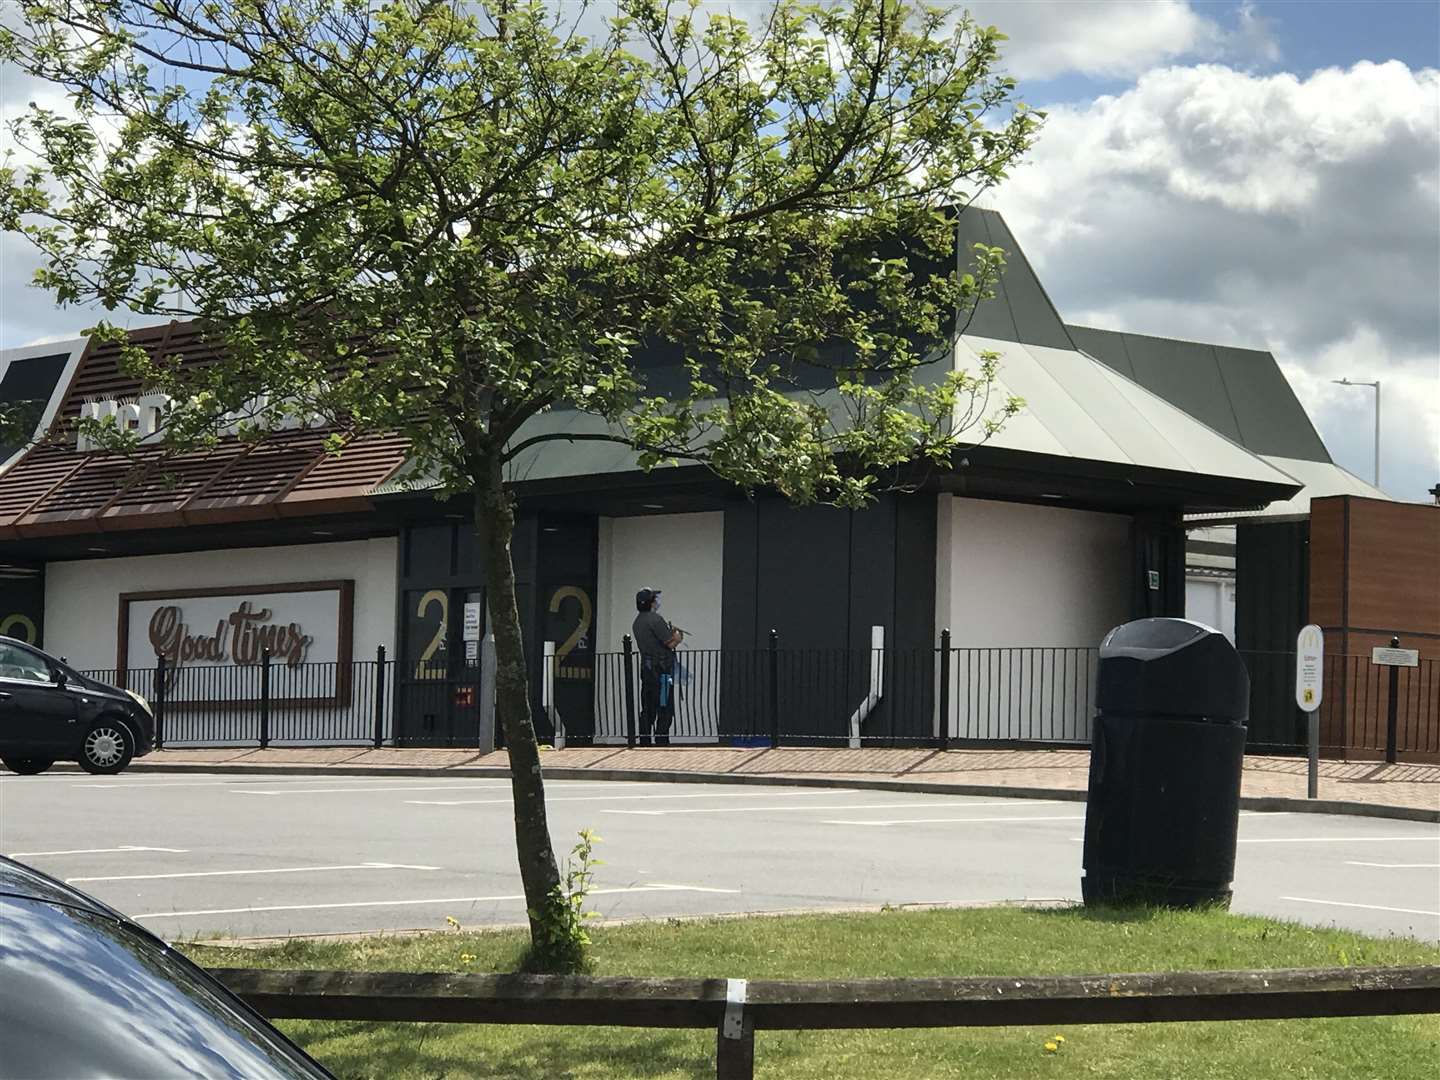 The Drive-Thru will remain closed at Sittingbourne's McDonald's